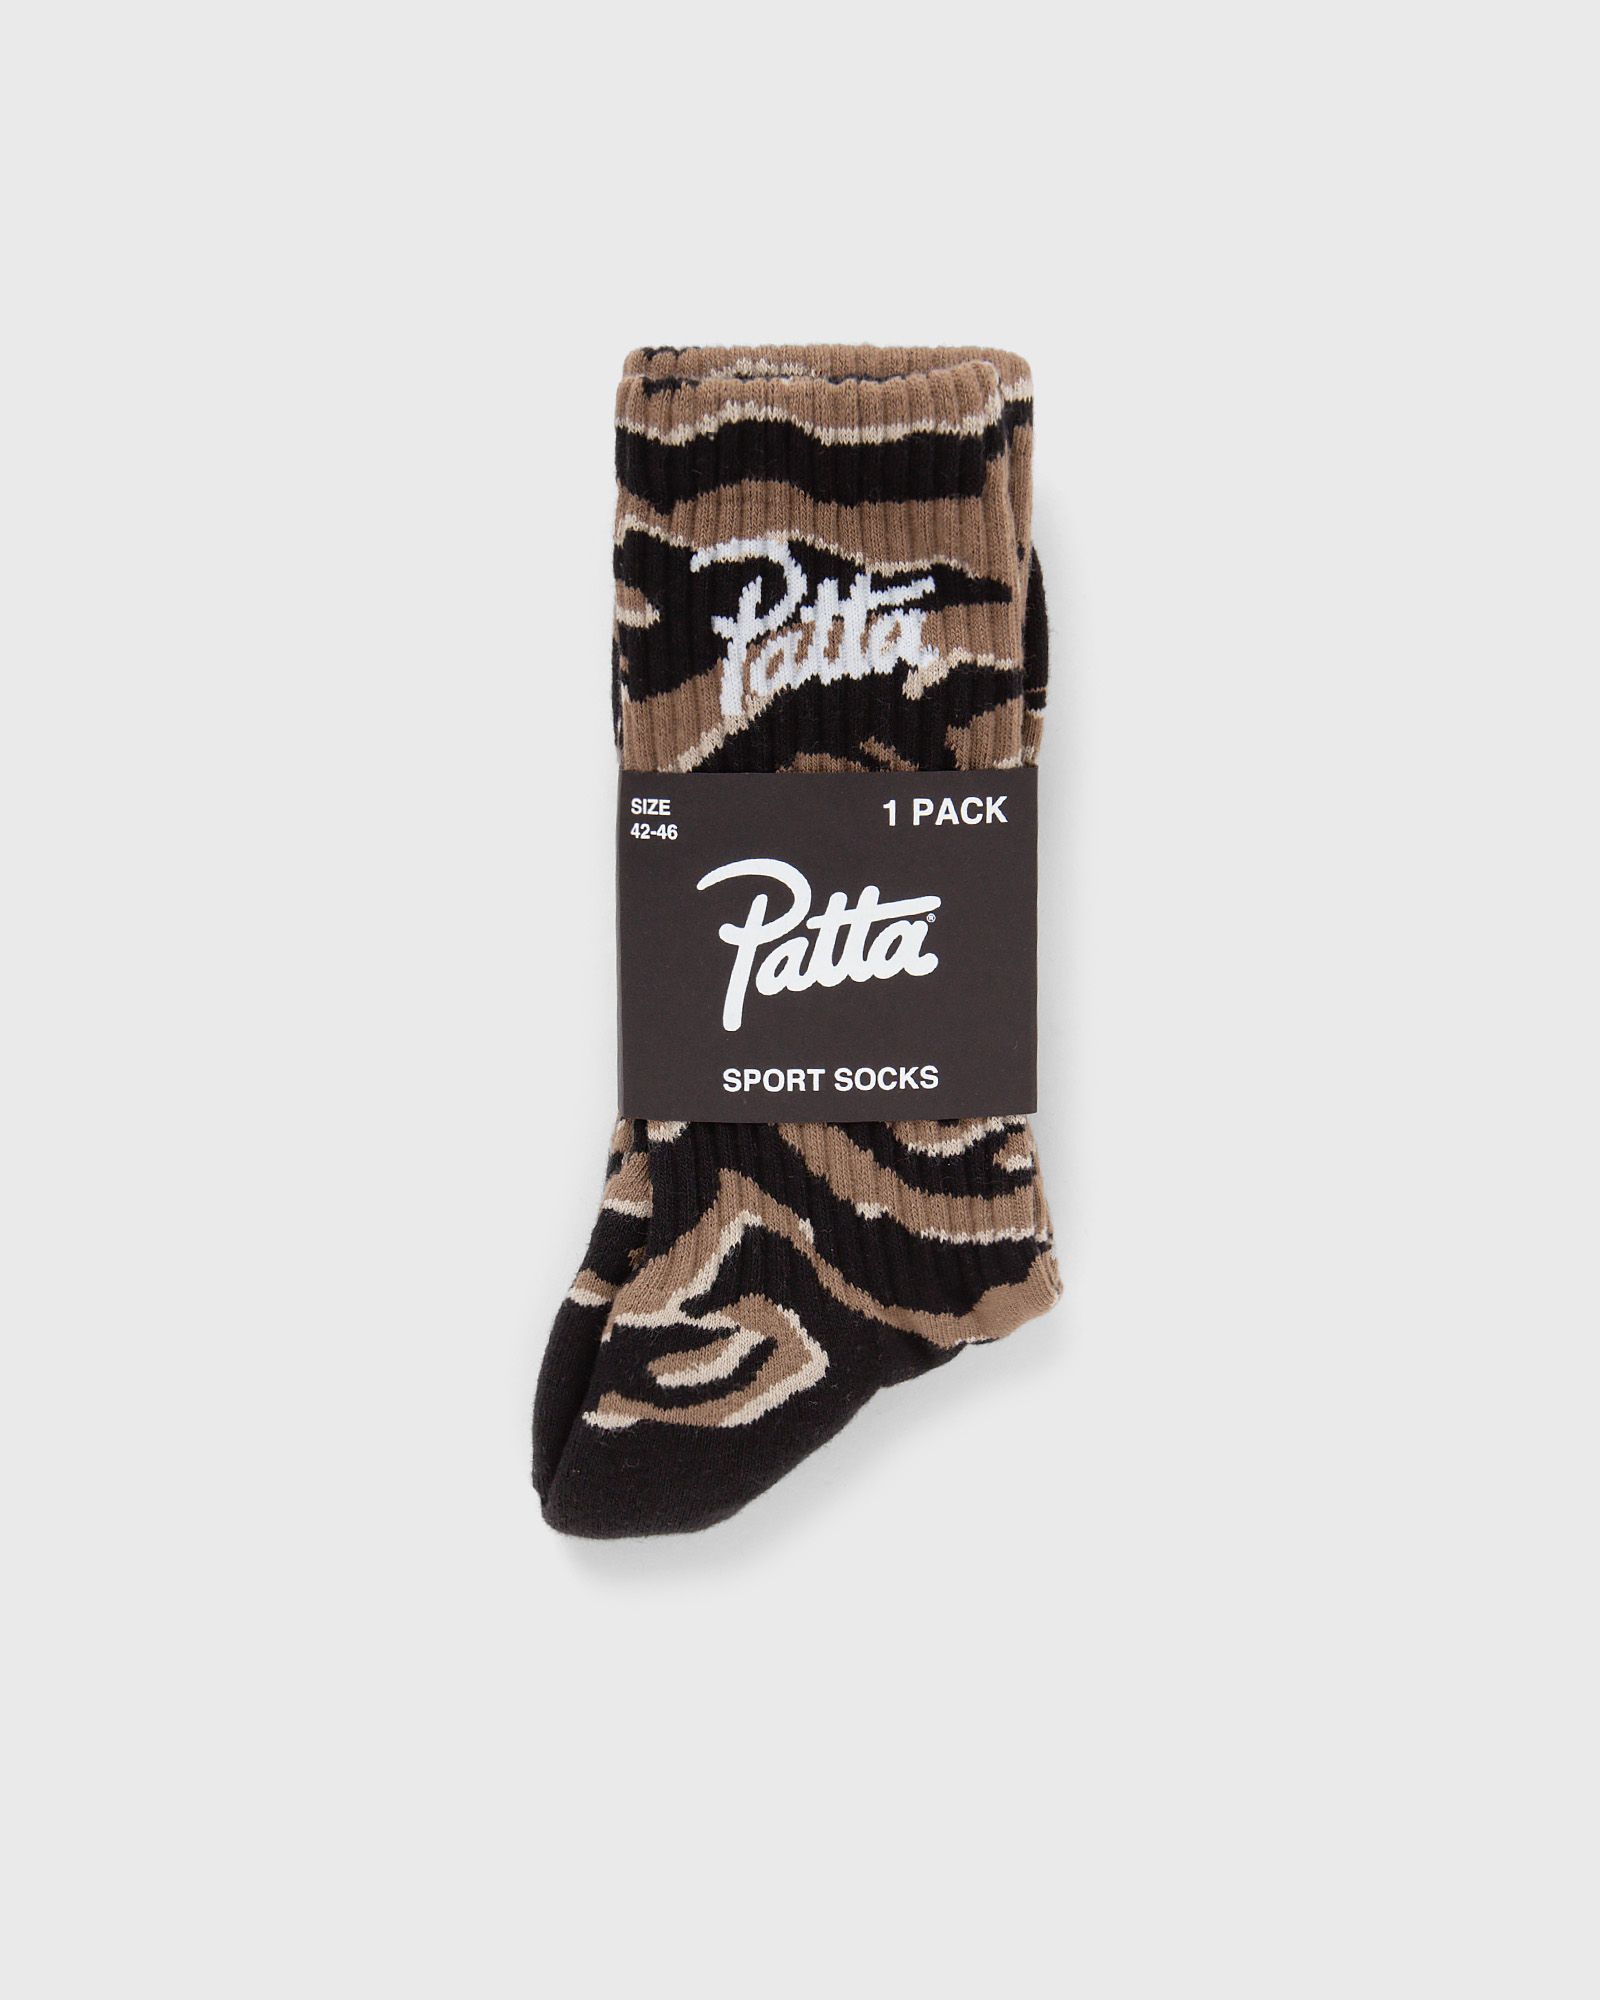 PATTA Tiger Stripe Script Logo Sport Socks men Socks black|brown in Größe:EU 42-46 von PATTA